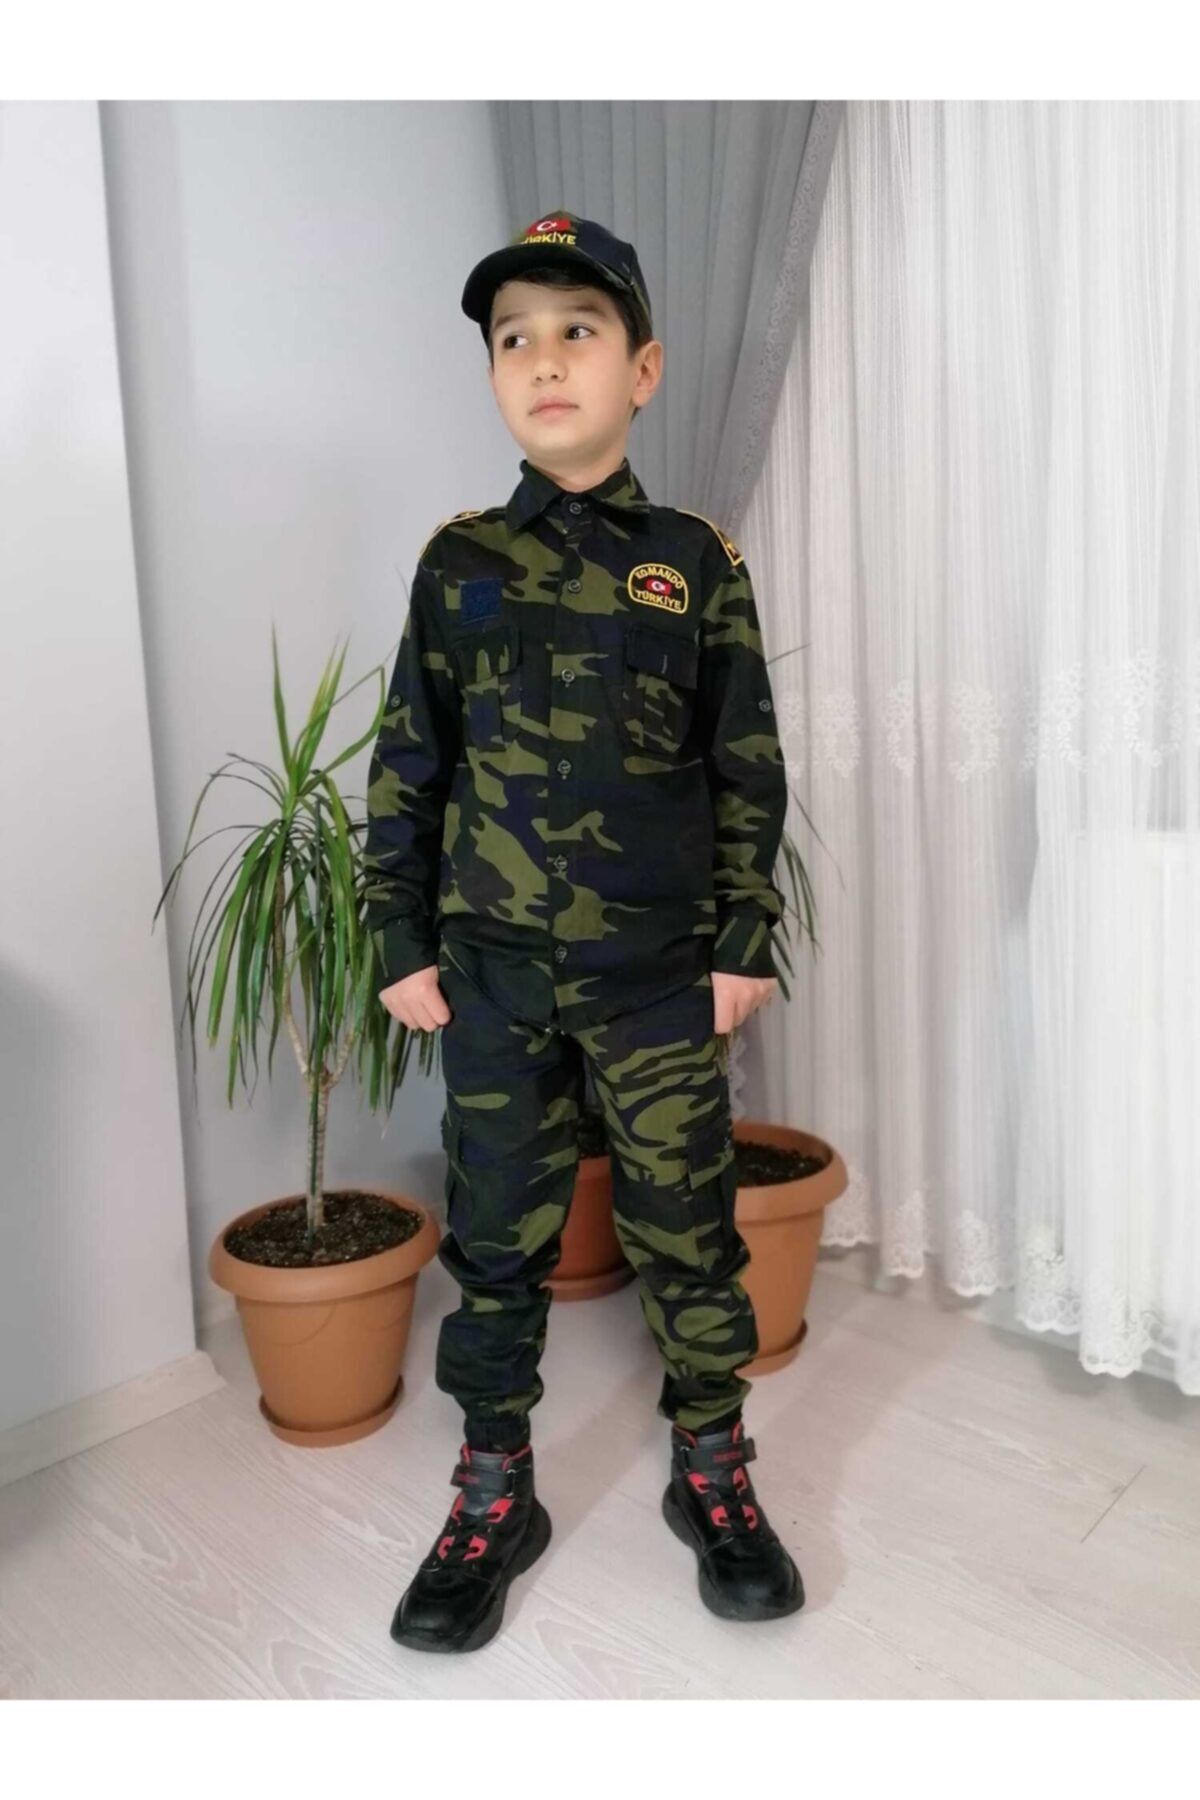 VEPAŞ Çocuk Komando Asker Kamuflaj Takımı